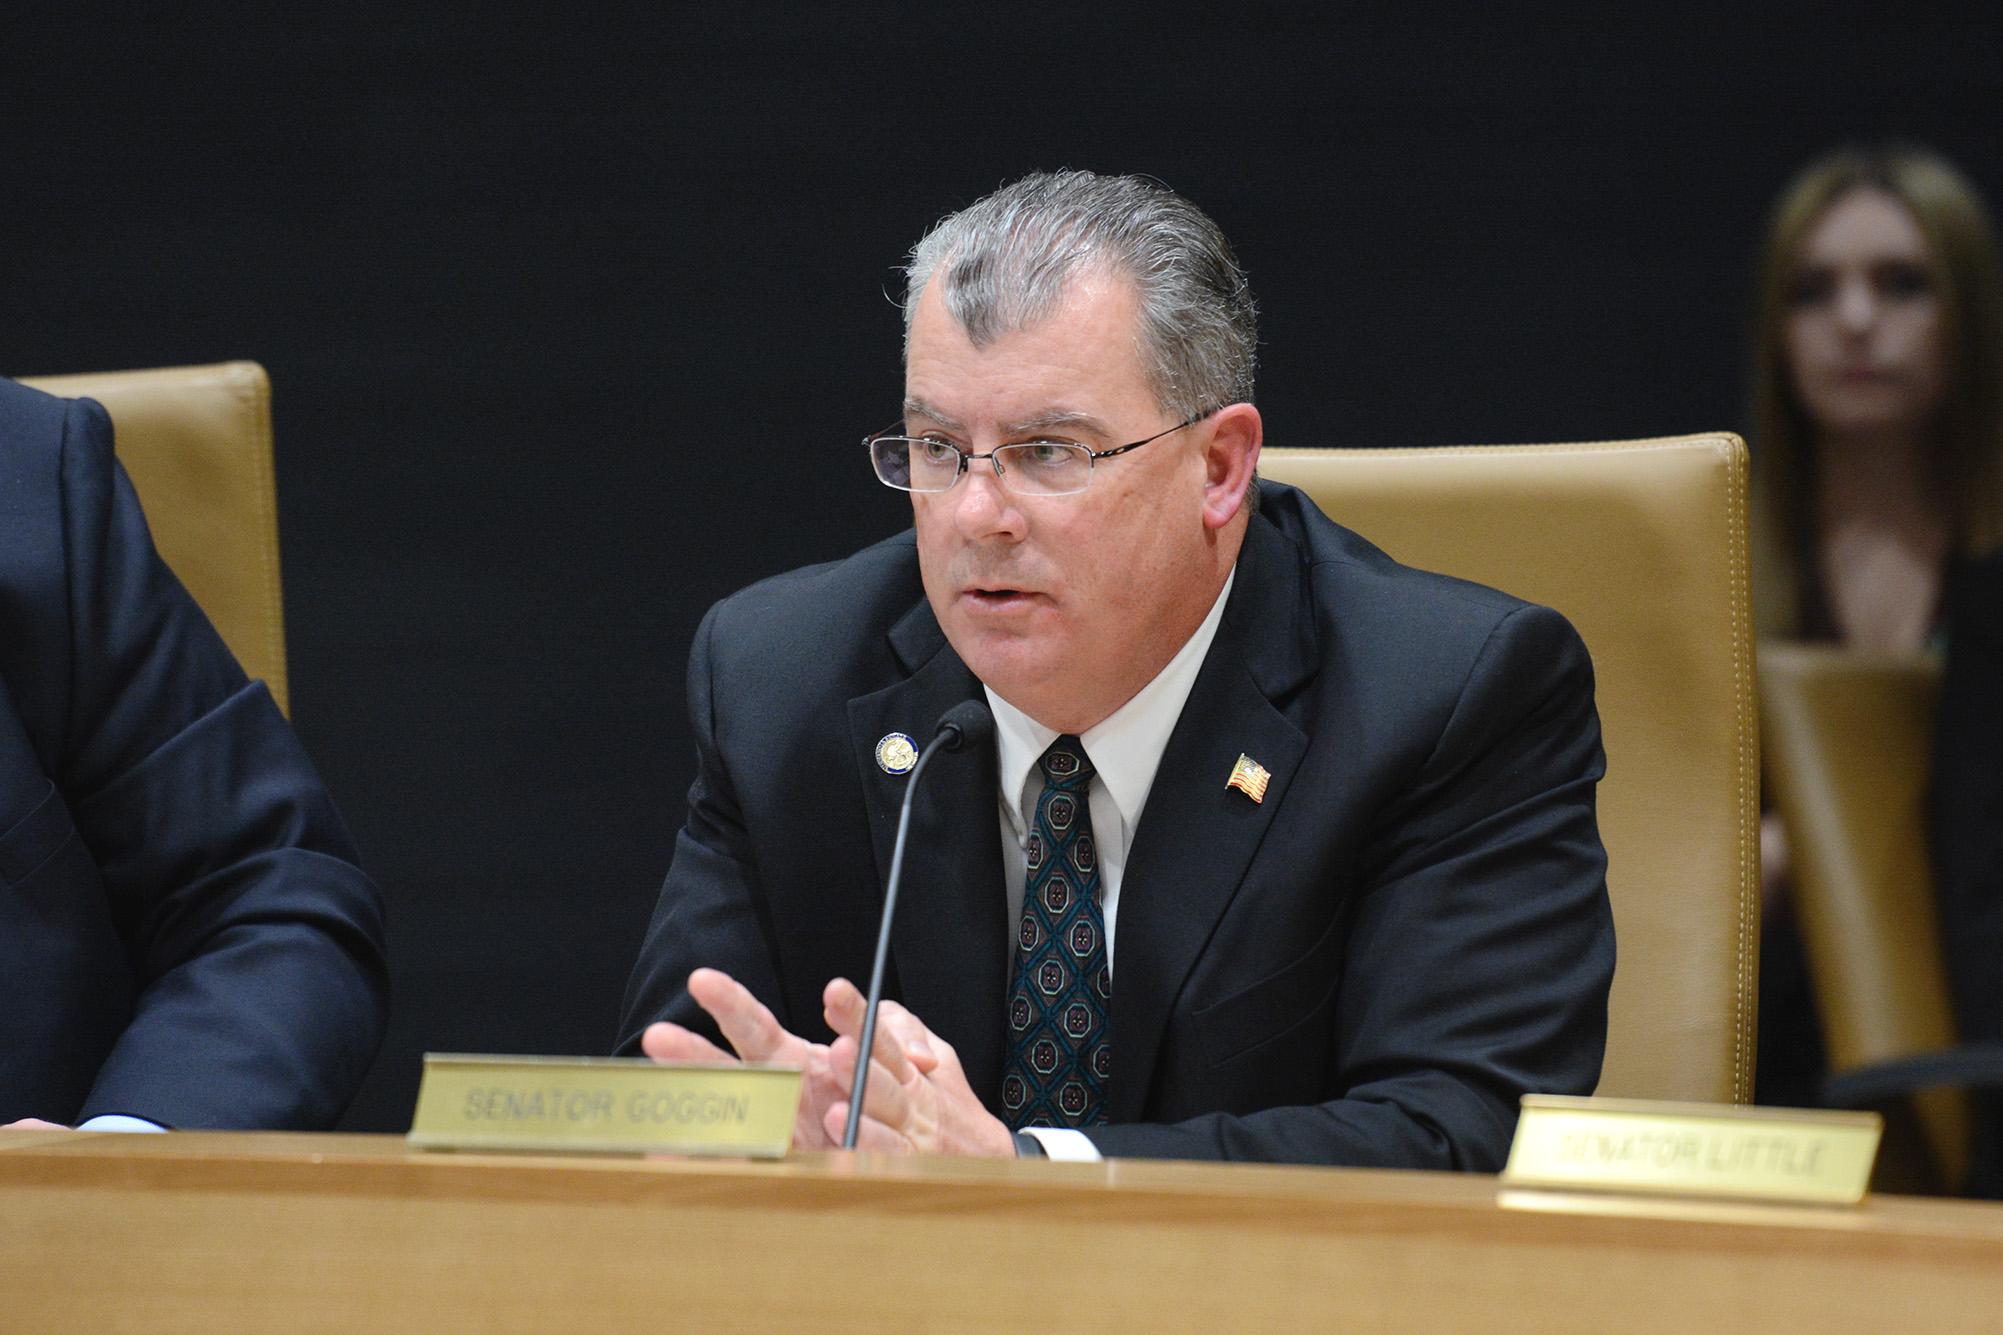 Senator Goggin: CARES funds will bring relief to district